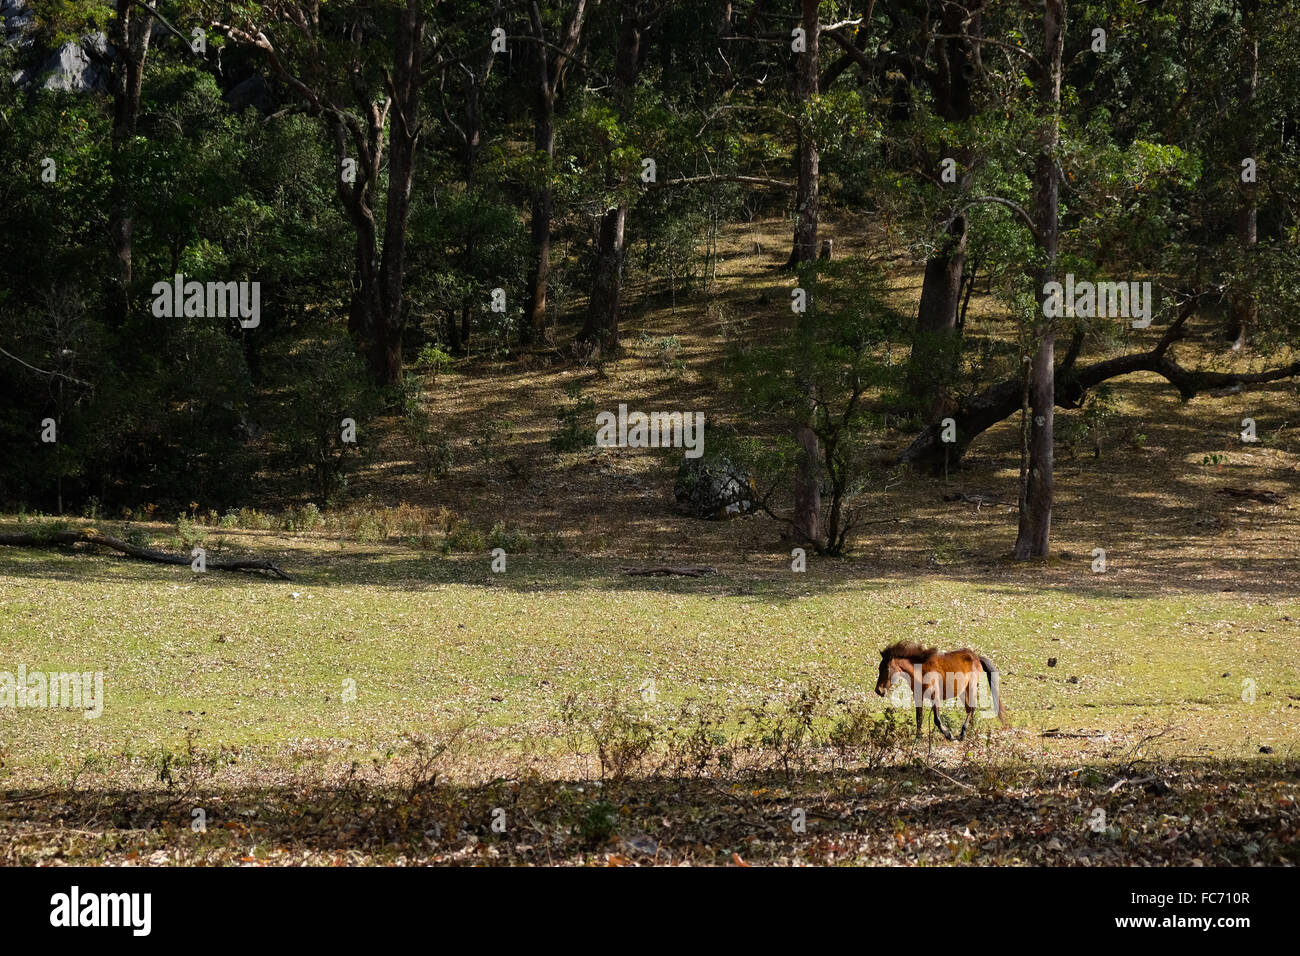 In Fatumnasi, Timor Tengah Selatan, East Nusa Tenggara, Indonesien, zieht ein Pony auf Grünland. Stockfoto